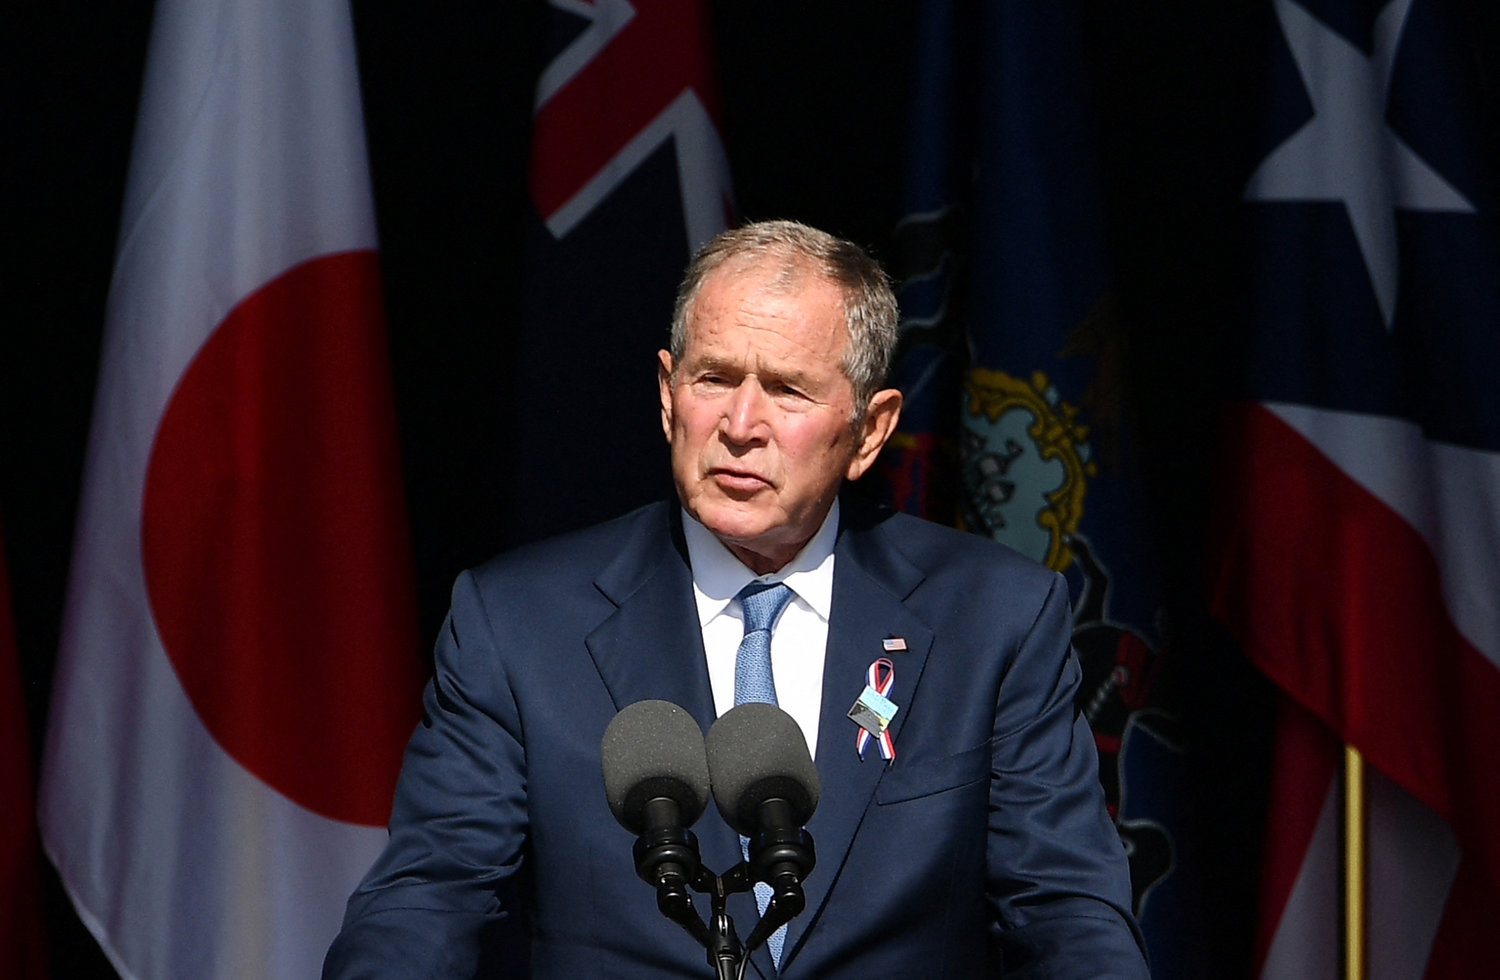 Former President George W. Bush speaks during a 9/11 commemoration at the Flight 93 National Memorial in Shanksville, Pa., on September 11, 2021. (Mandel Ngan/AFP/Getty Images/TNS)